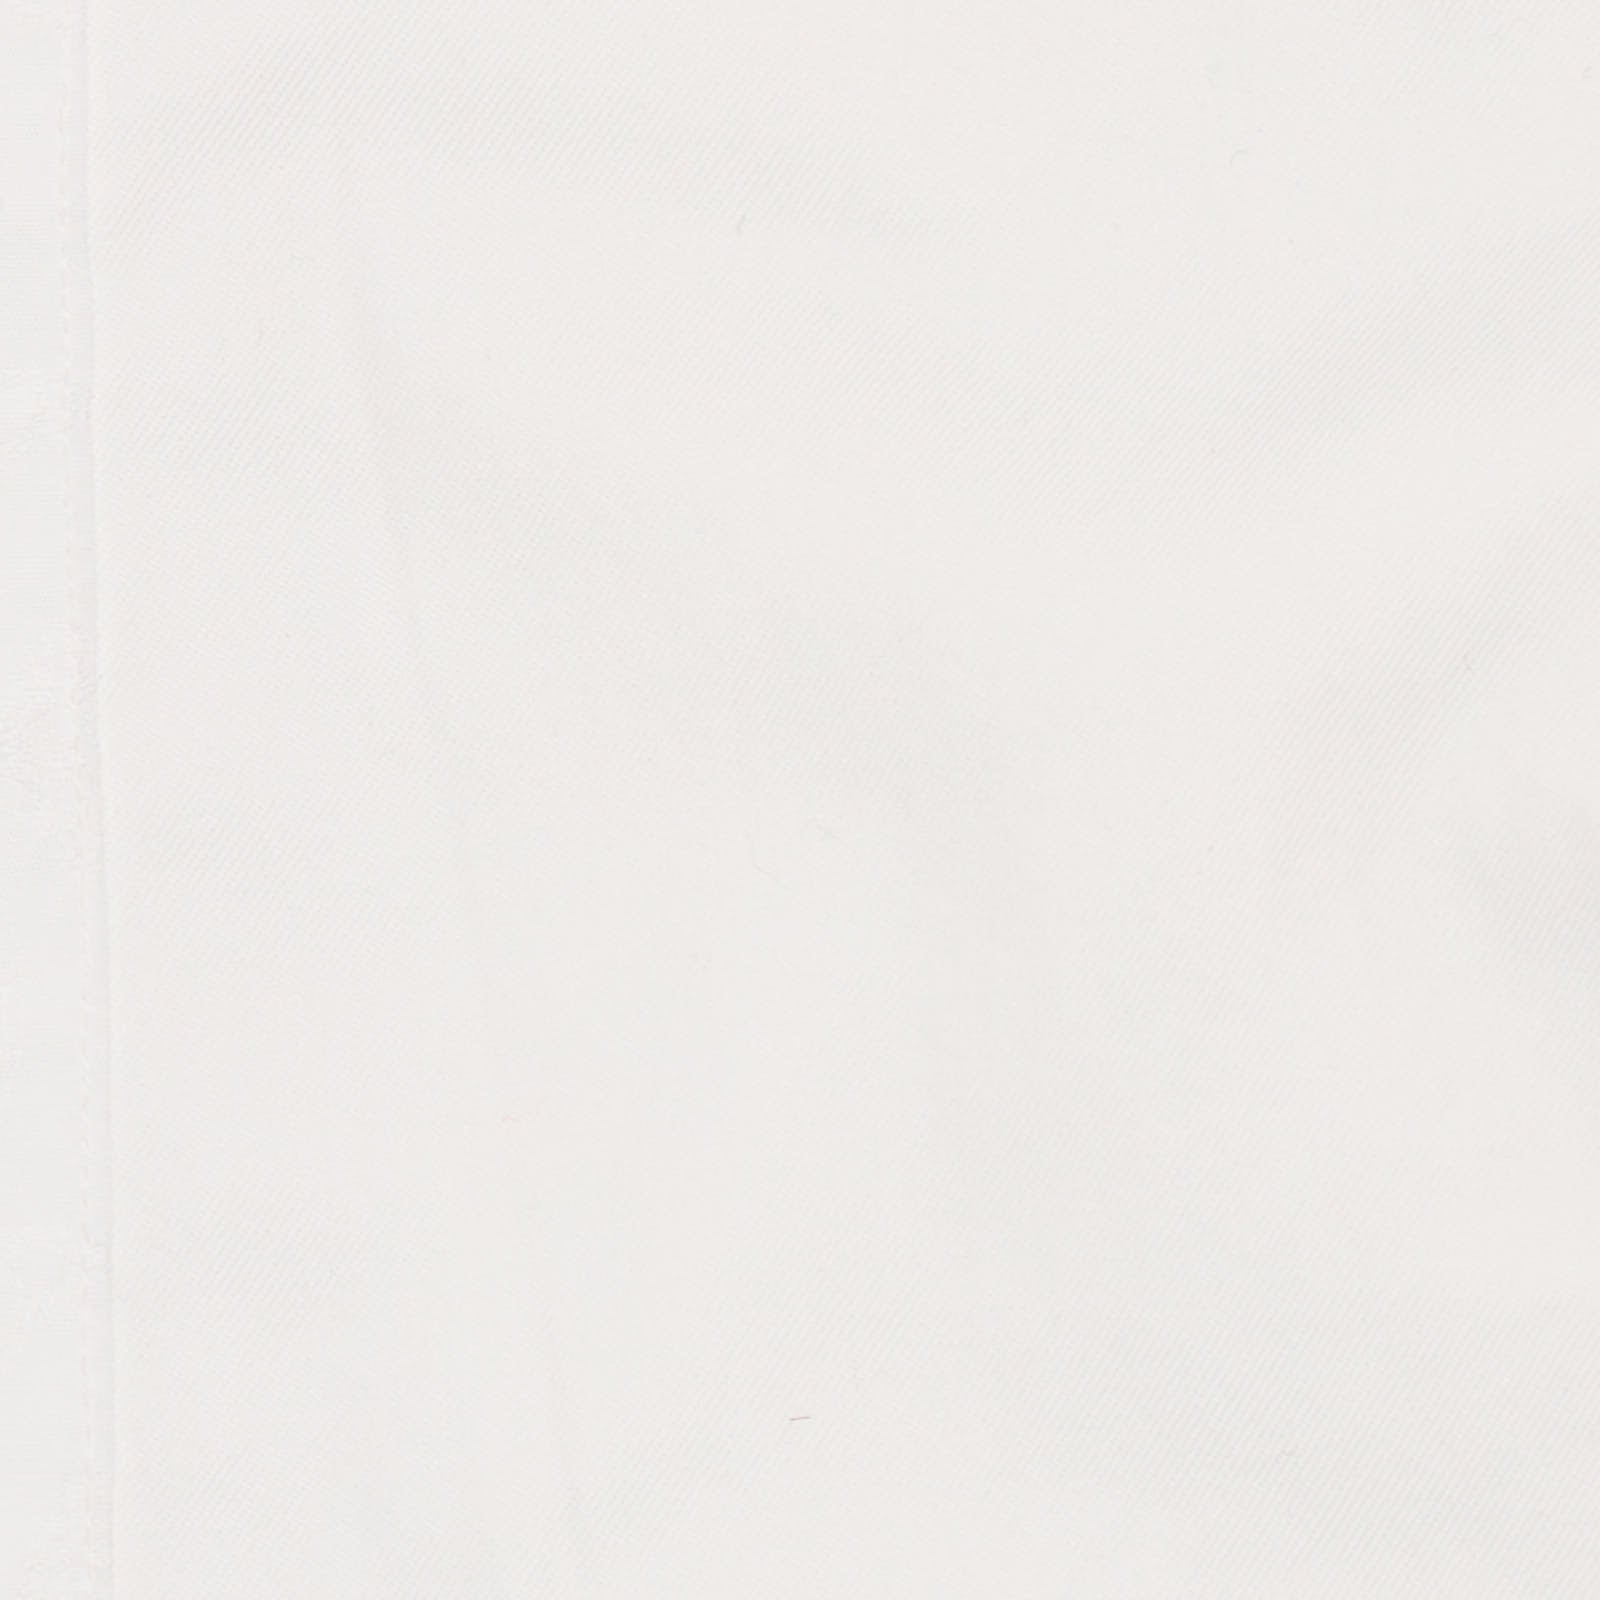 VINCENZO DI RUGGIERO Handmade White Paisley Cotton Dress Shirt Shirt EU 39 NEW US 15.5